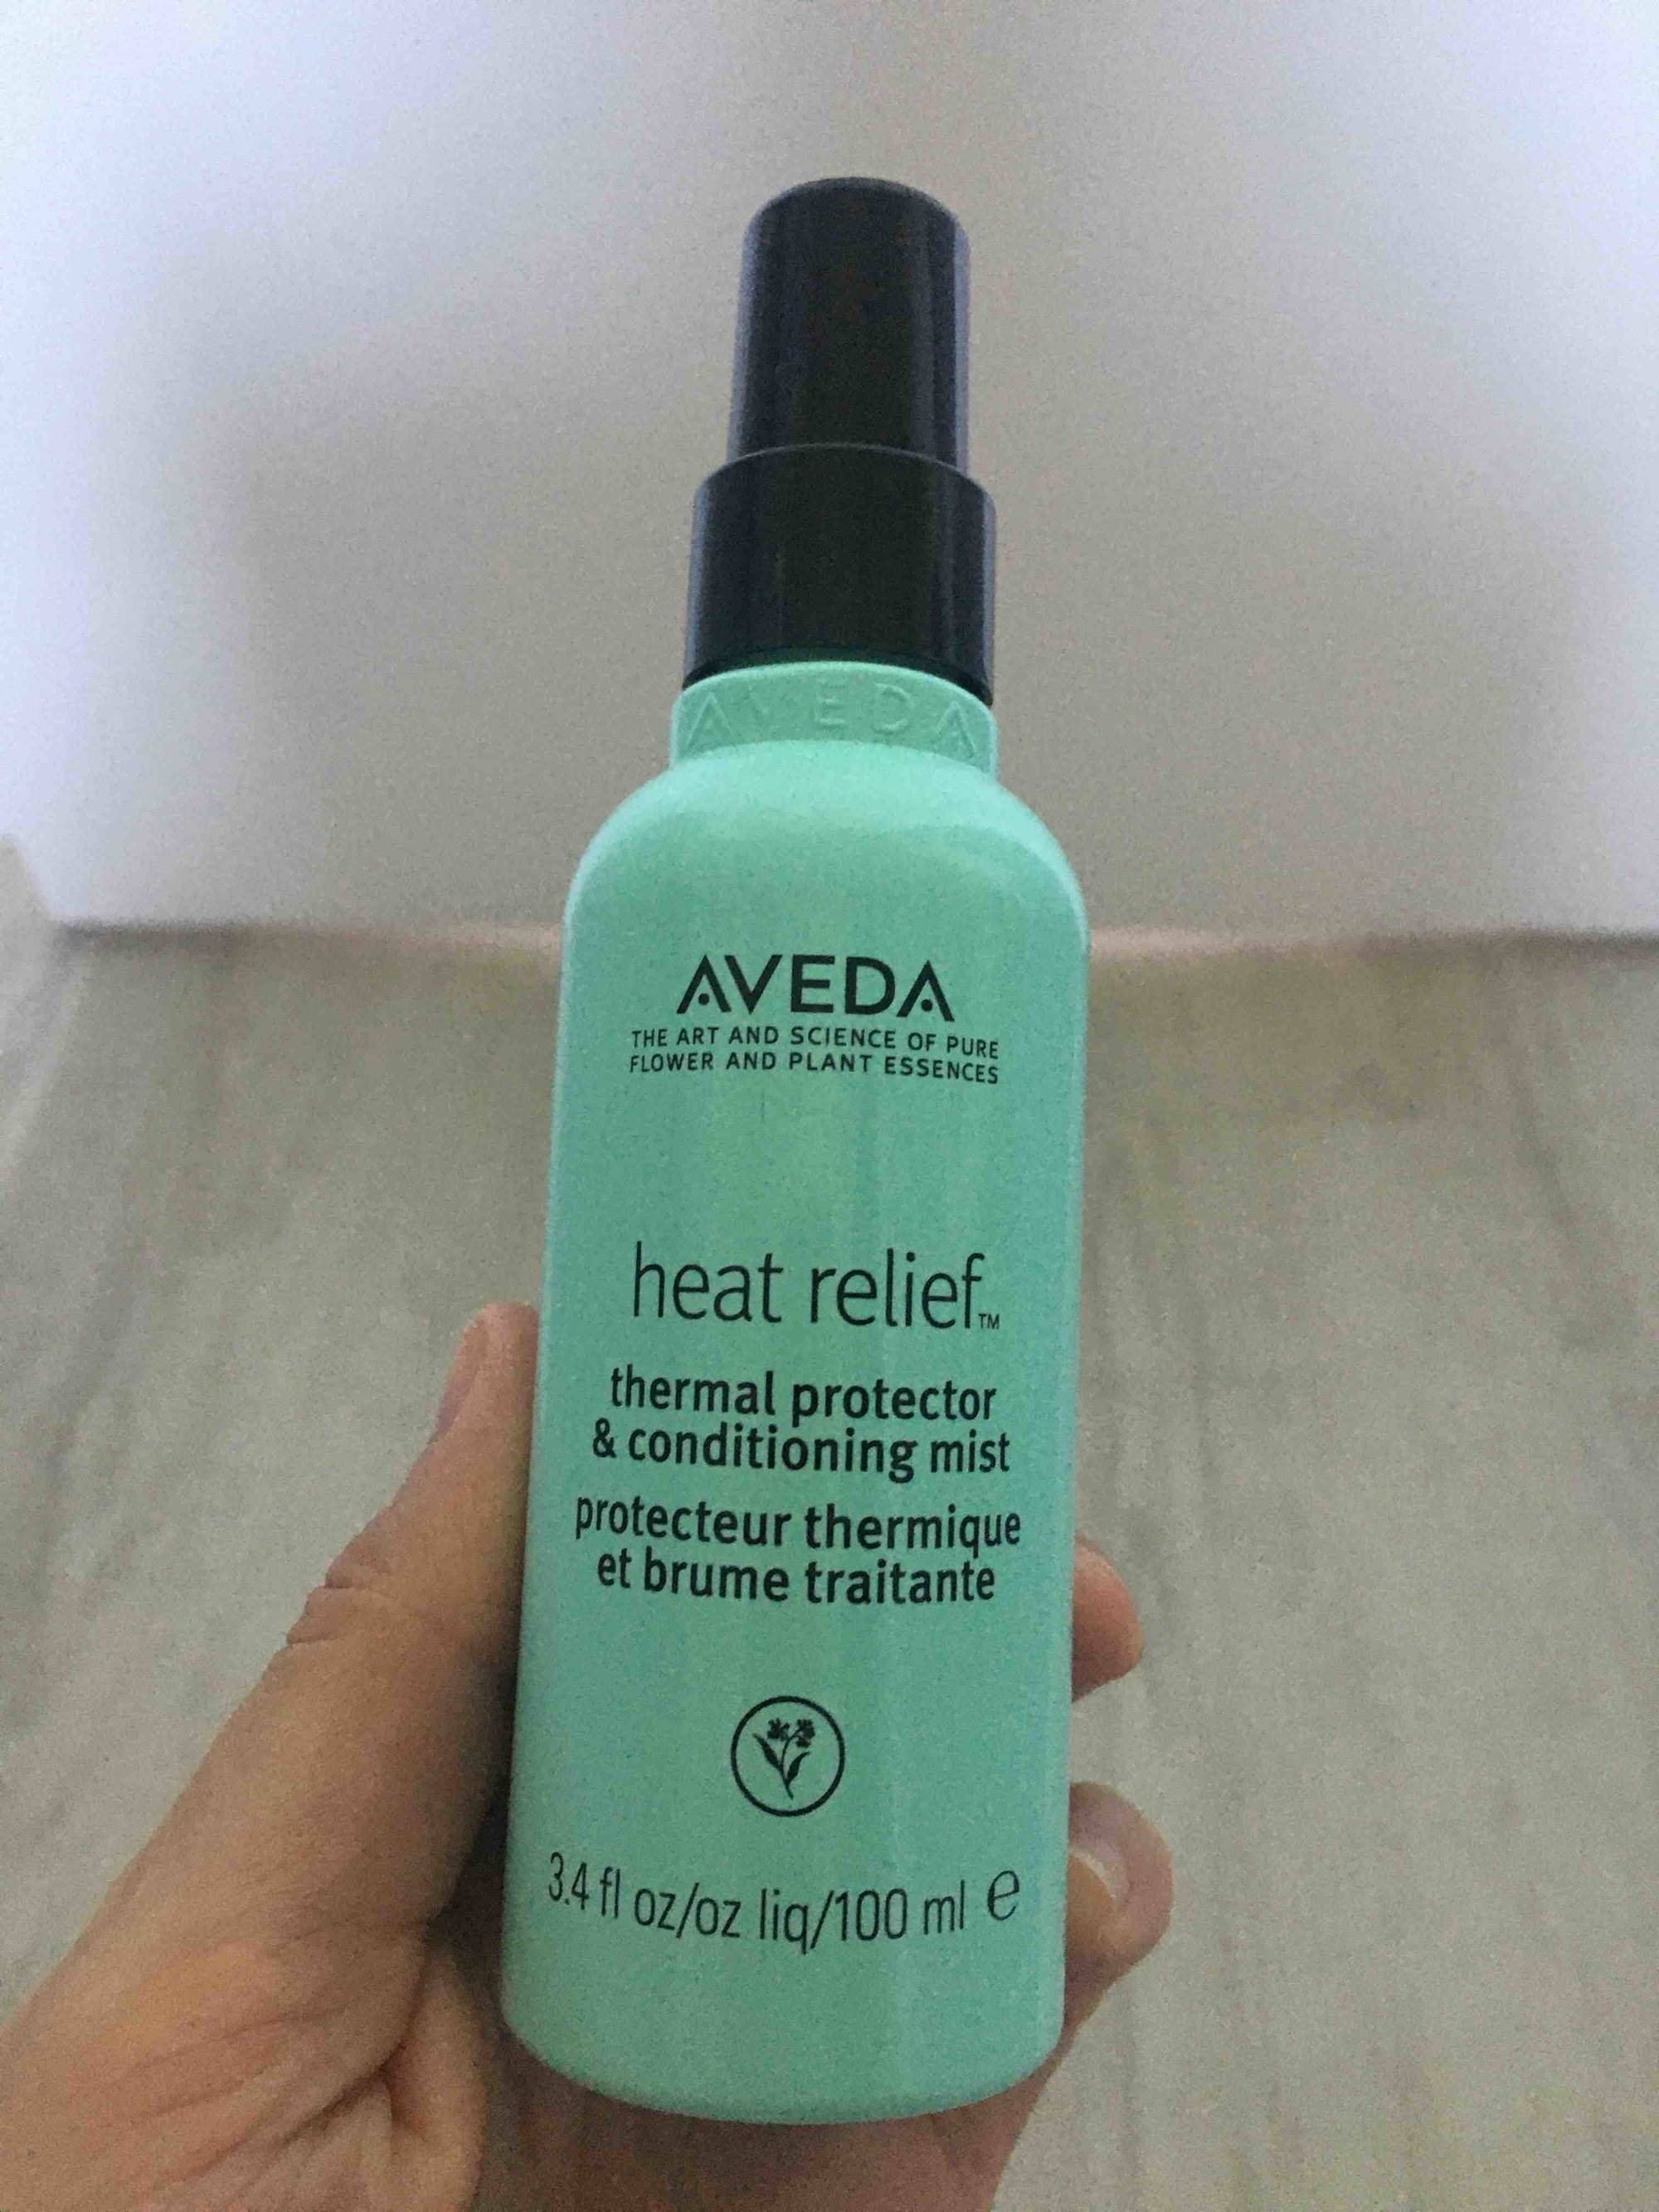 AVEDA - Heat relief - Protecteur thermique et brume traitante